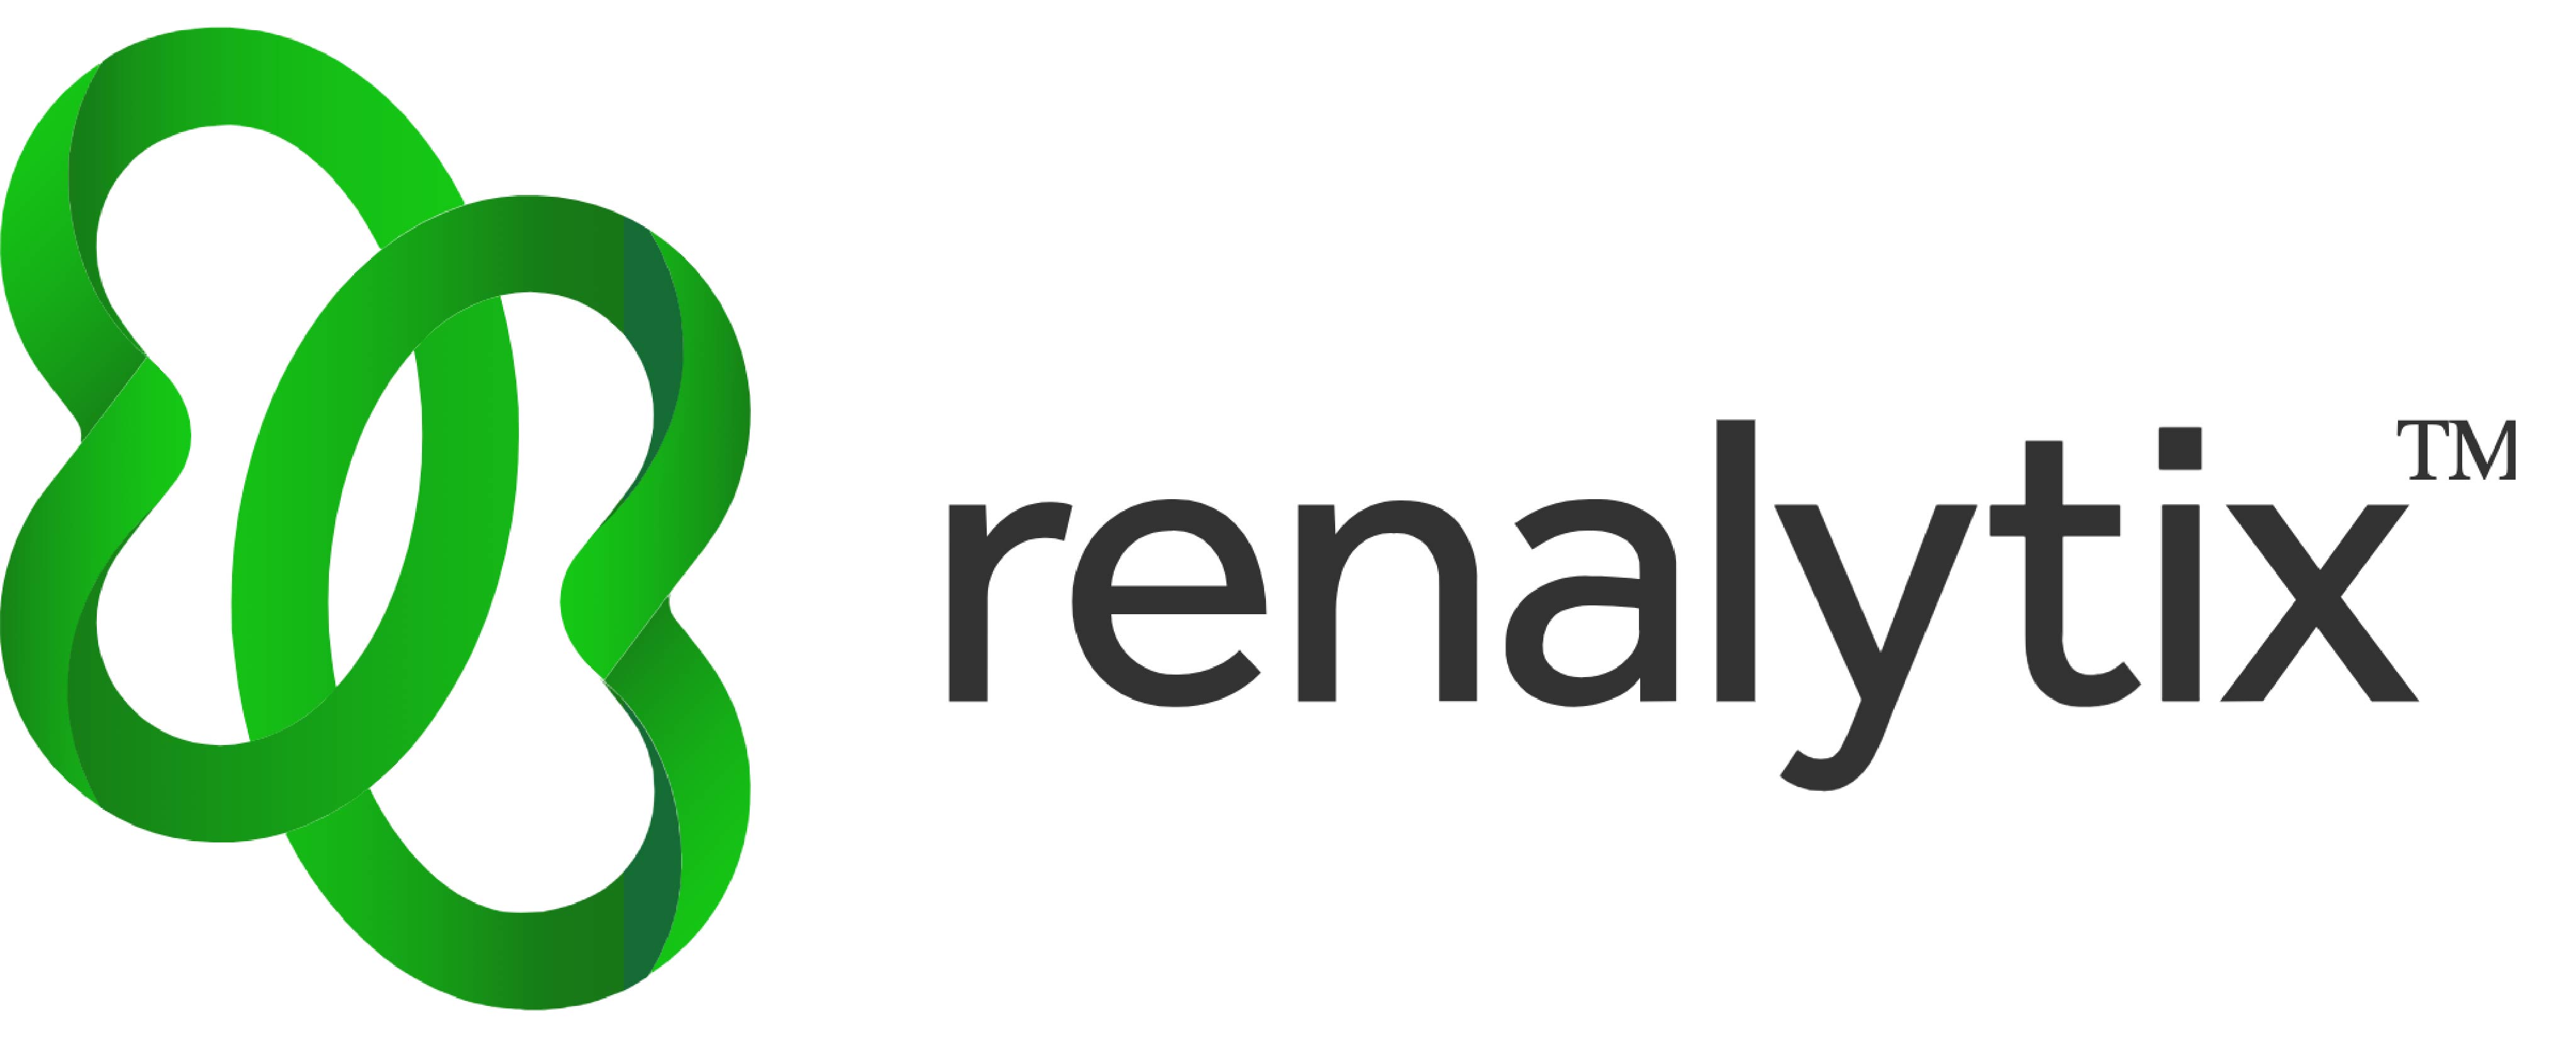 renalytix_logo.jpg